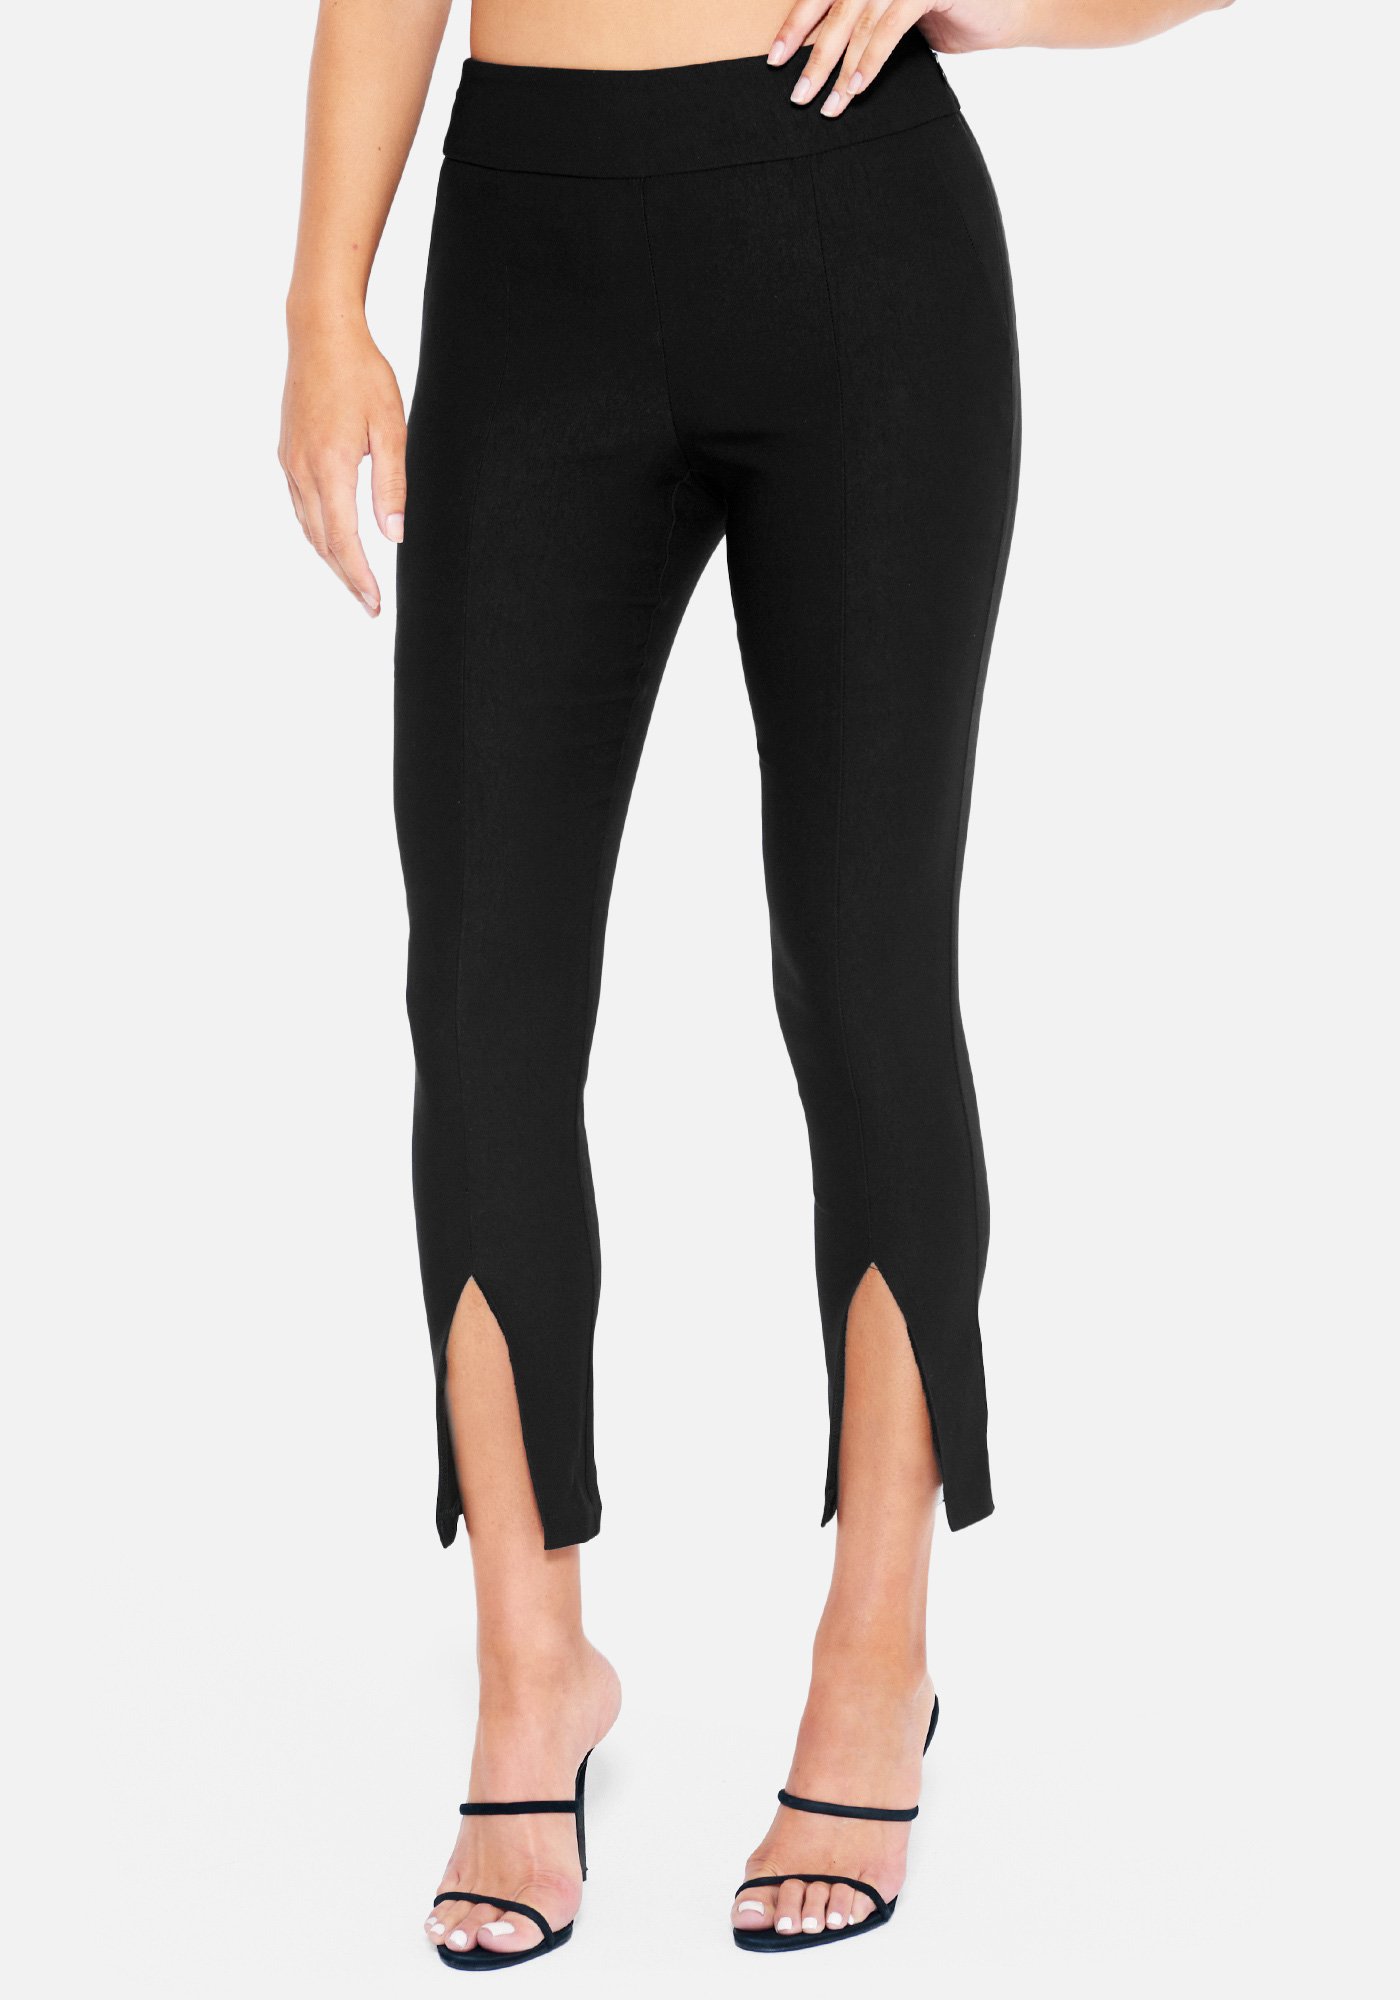 Bebe Women's Front Slit Trouser Pant, Size 6 in BLACK Spandex/Nylon